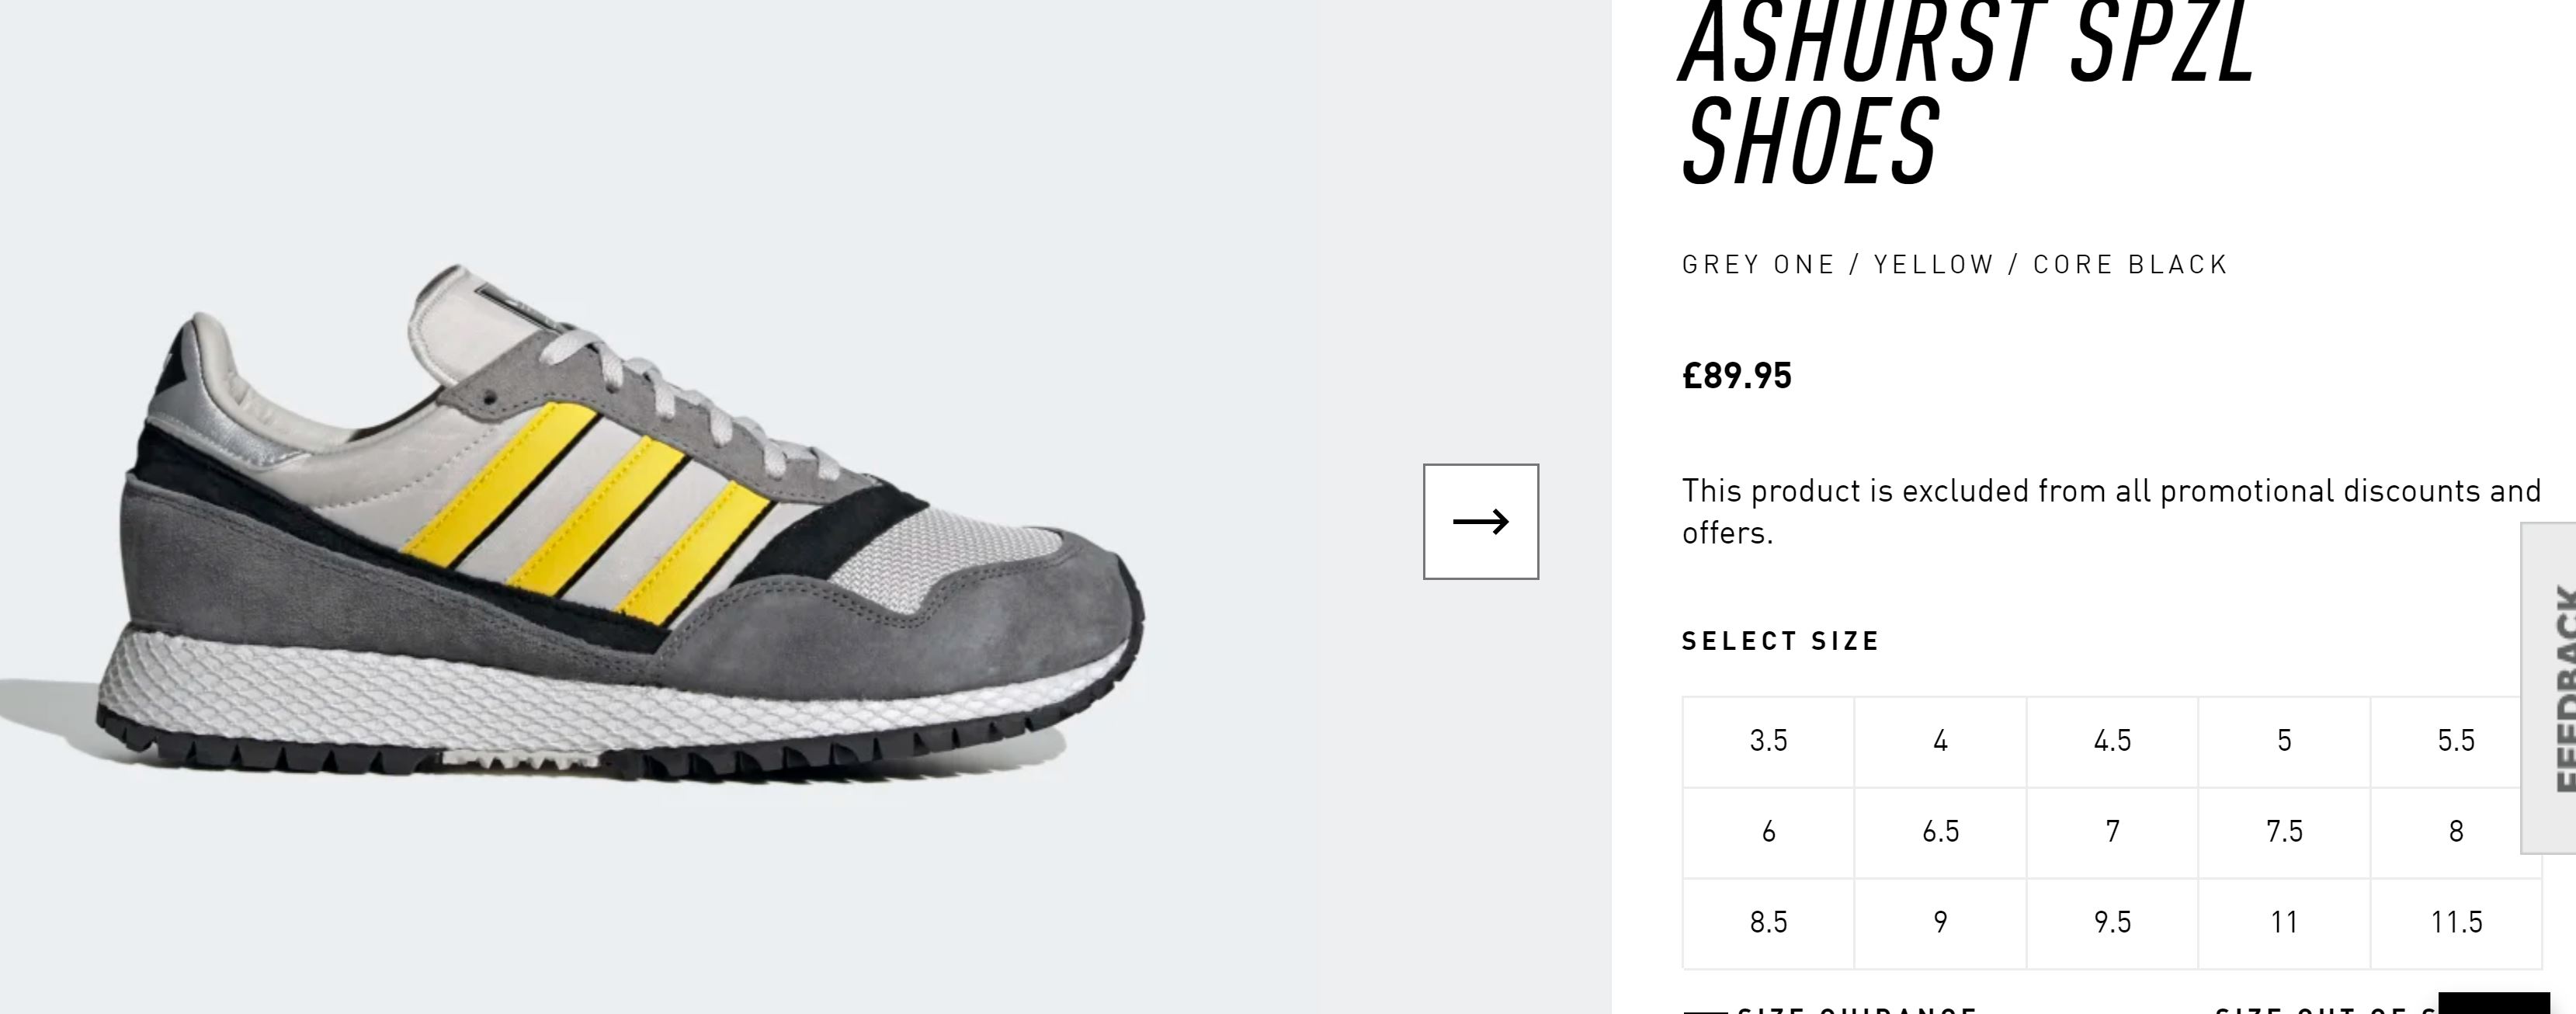 MoreSneakers.com al "EU ONLY: adidas Originals Ashurst Spezial on adidas EU UK:https://t.co/zVlhpGw9W3 DE:https://t.co/pTiO6Gsdmu NL:https://t.co/Cz2mdDSm8b ES:https://t.co/QX9APZTamN IT:https://t.co/XglCBp1XDi BE ...